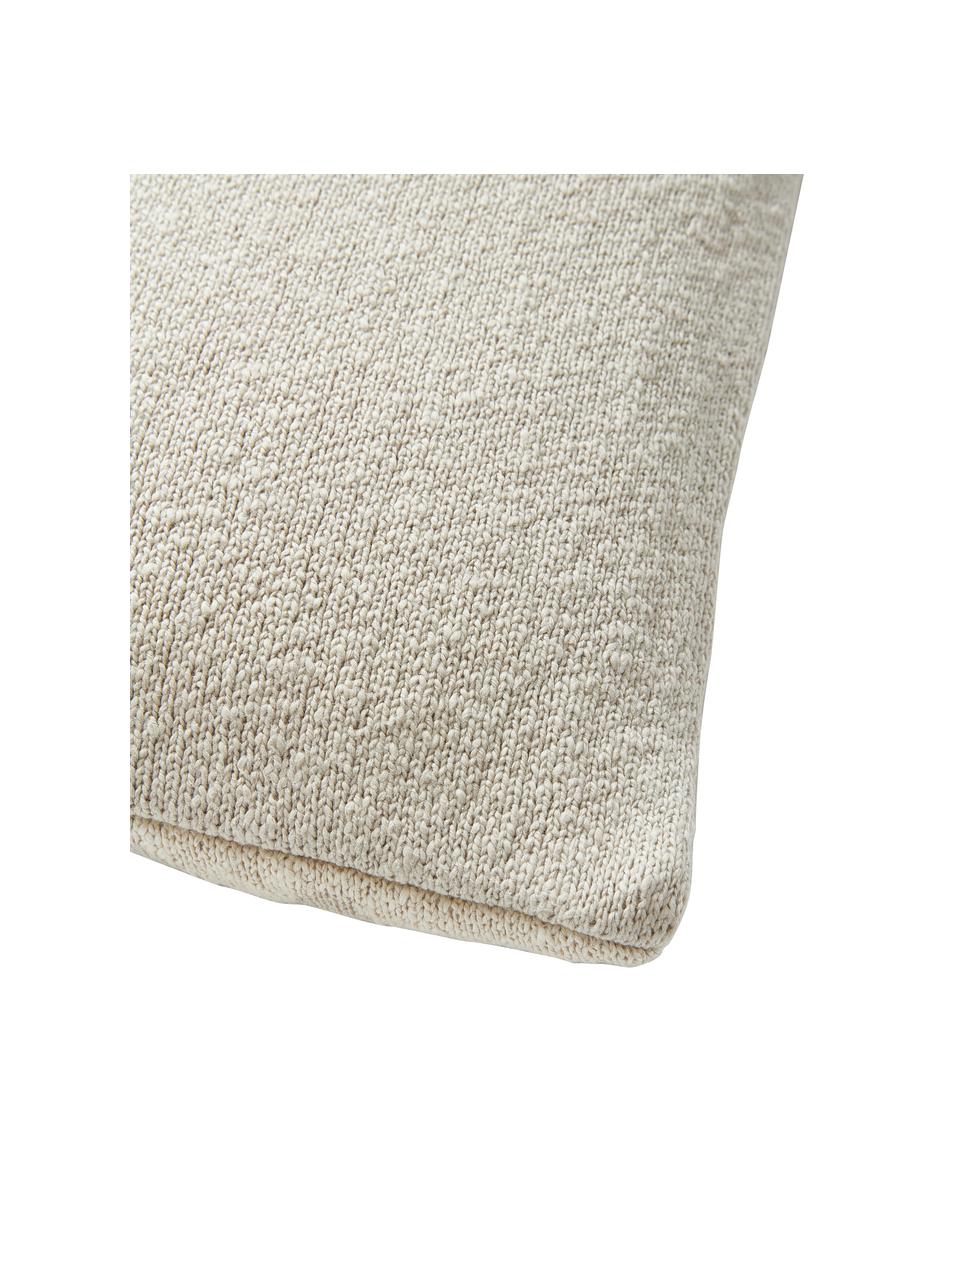 Funda de cojín bordada Anslei, 100% algodón, Beige, blanco crema, An 45 x L 45 cm